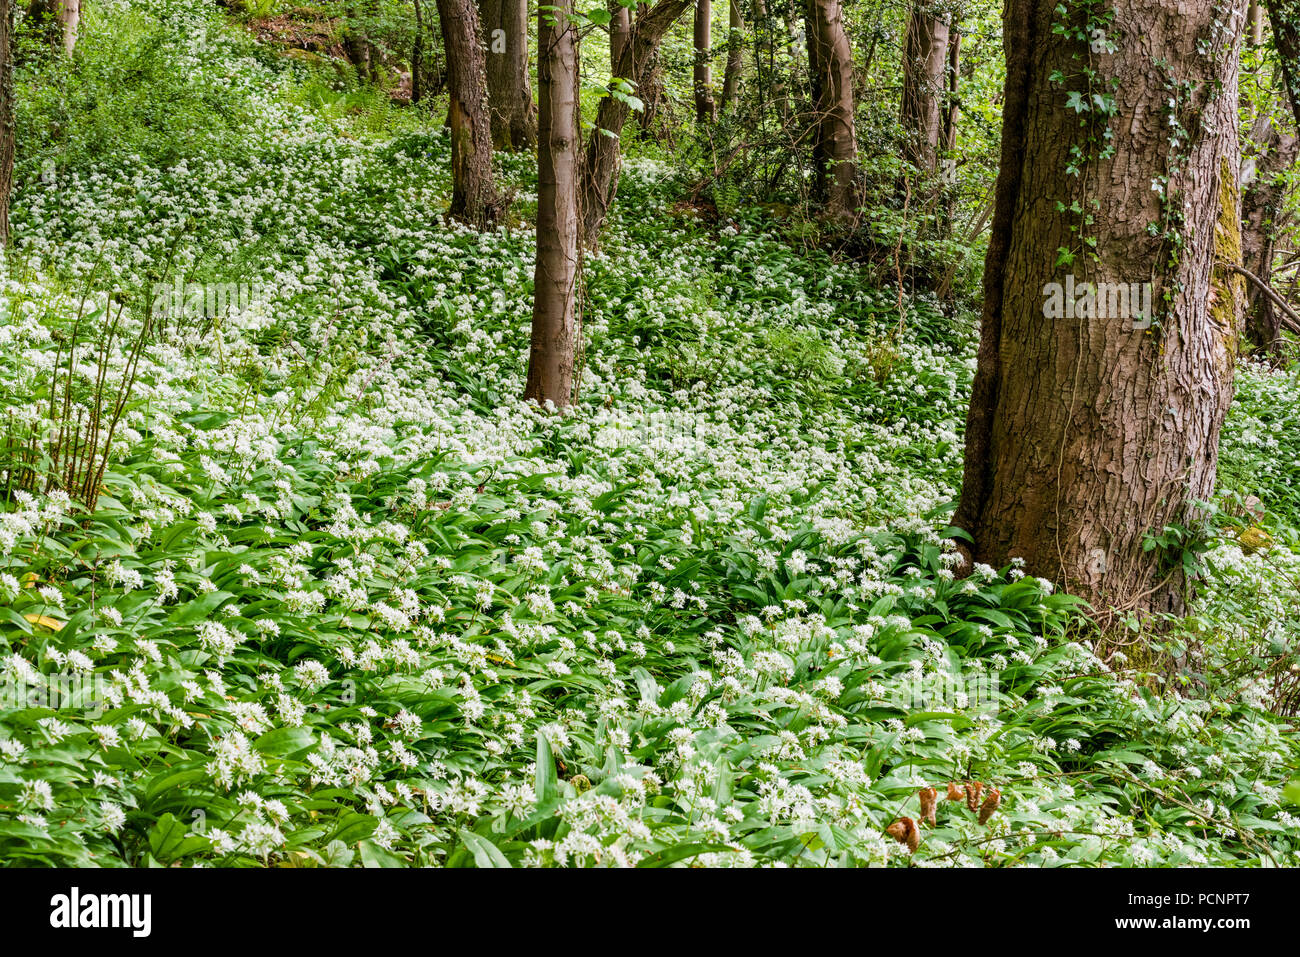 Wild Garlic - Allium ursinum – also known as ramsons, broad-leaved garlic, wood garlic, bear leek, or bear's garlic often found in ancient woodlands. Stock Photo